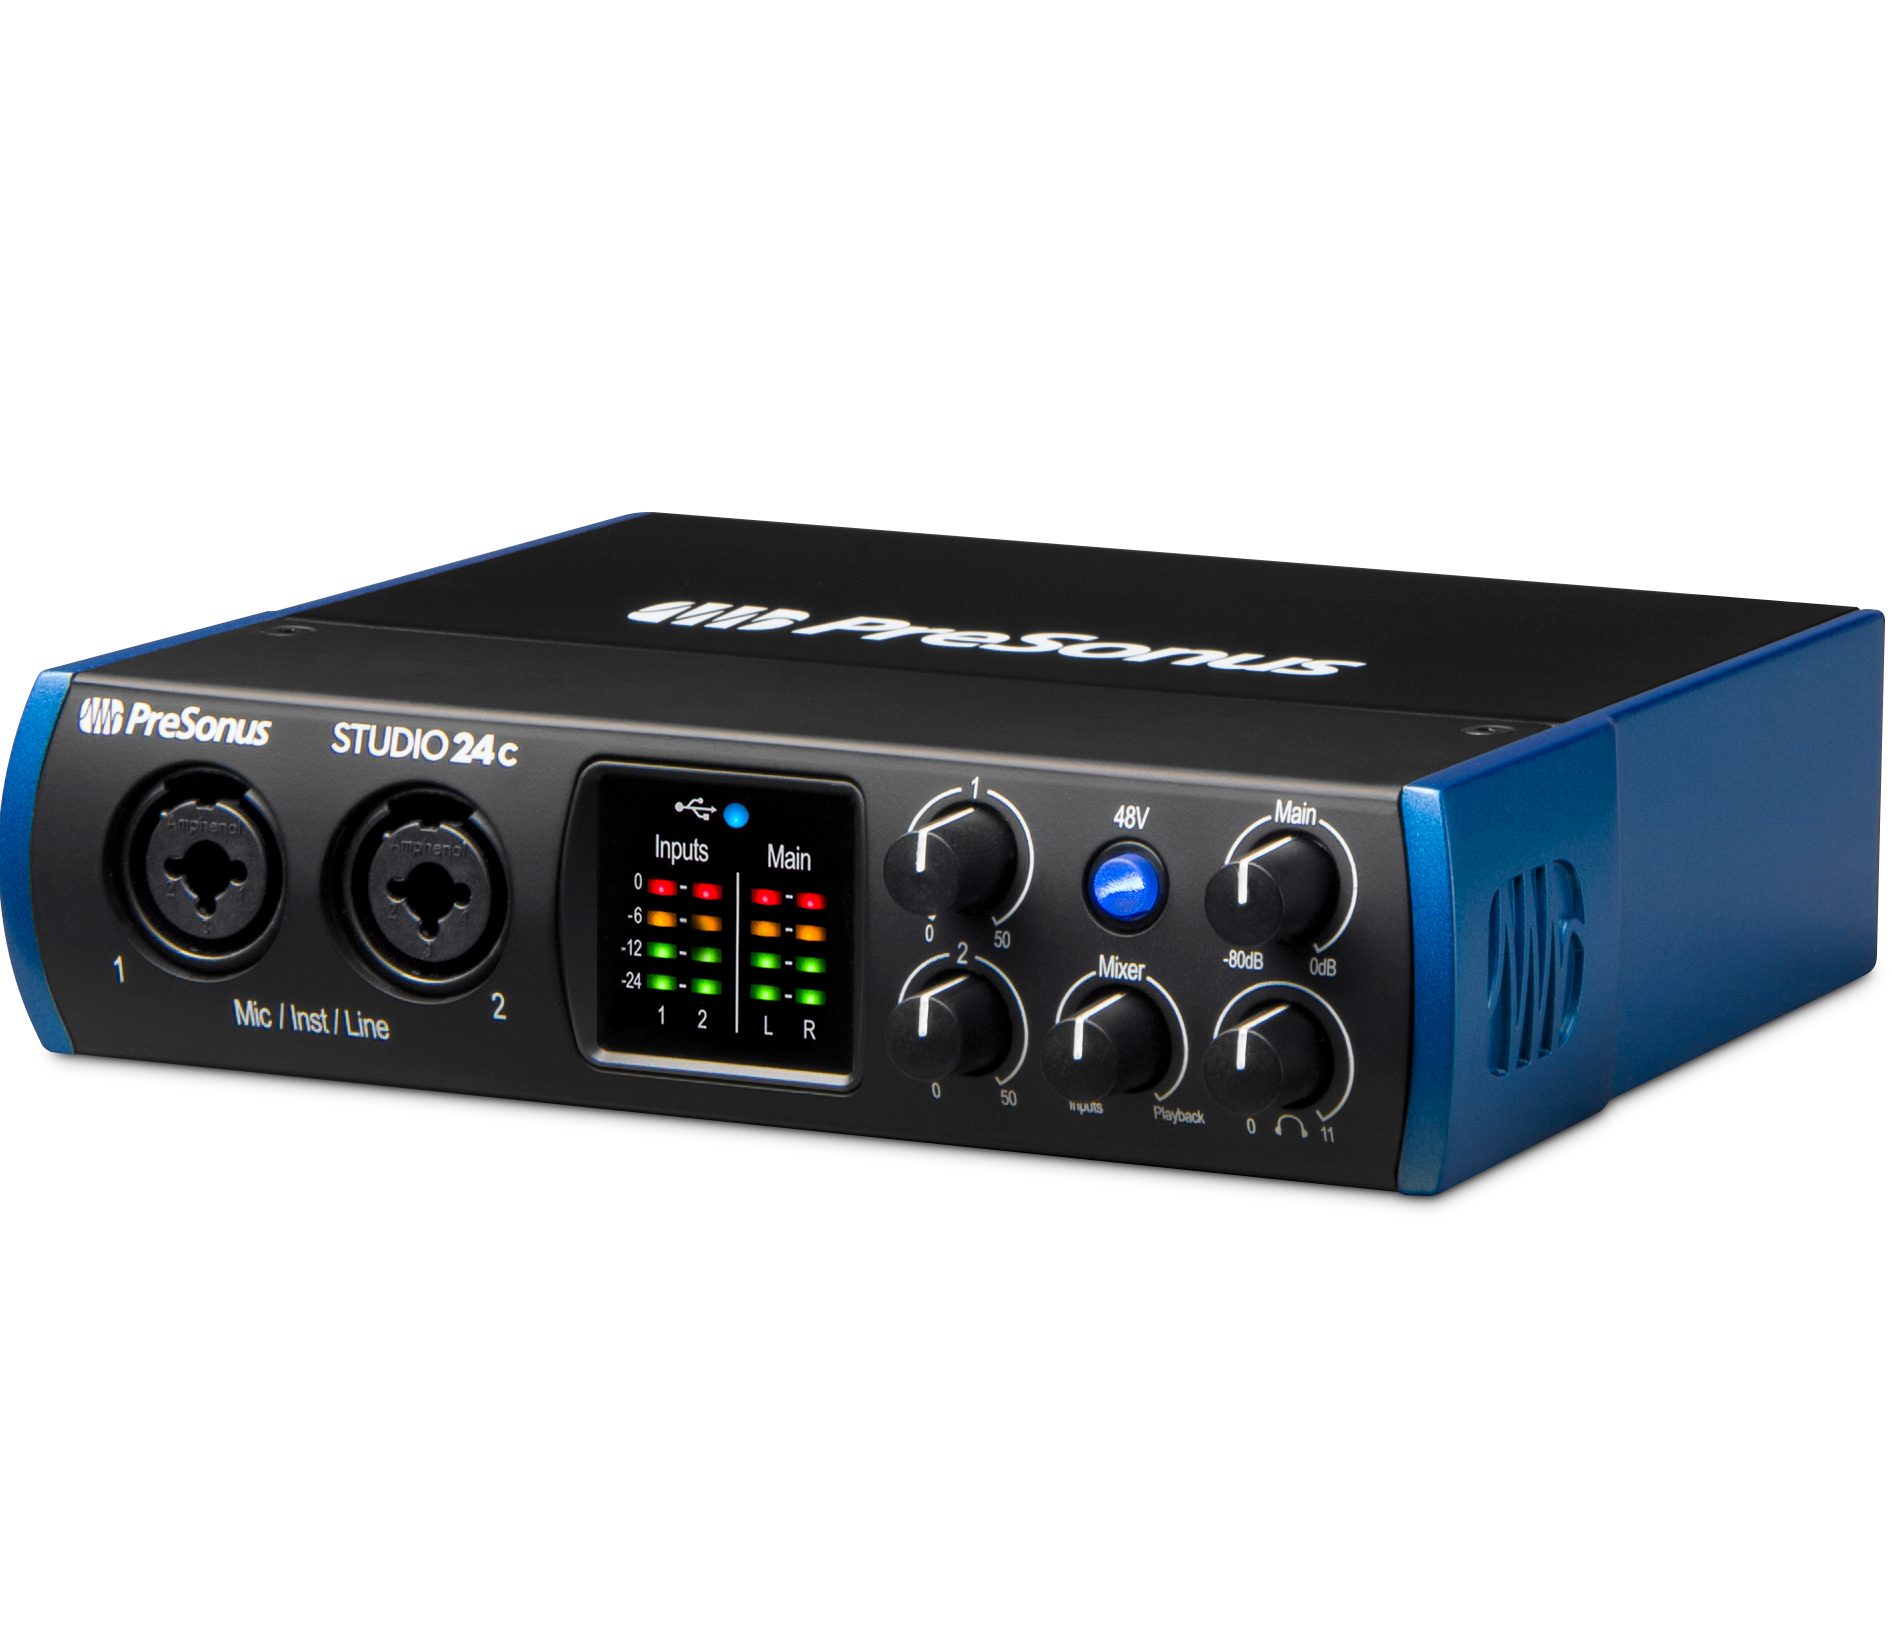 PreSonus Studio 24c USB Audio Interface